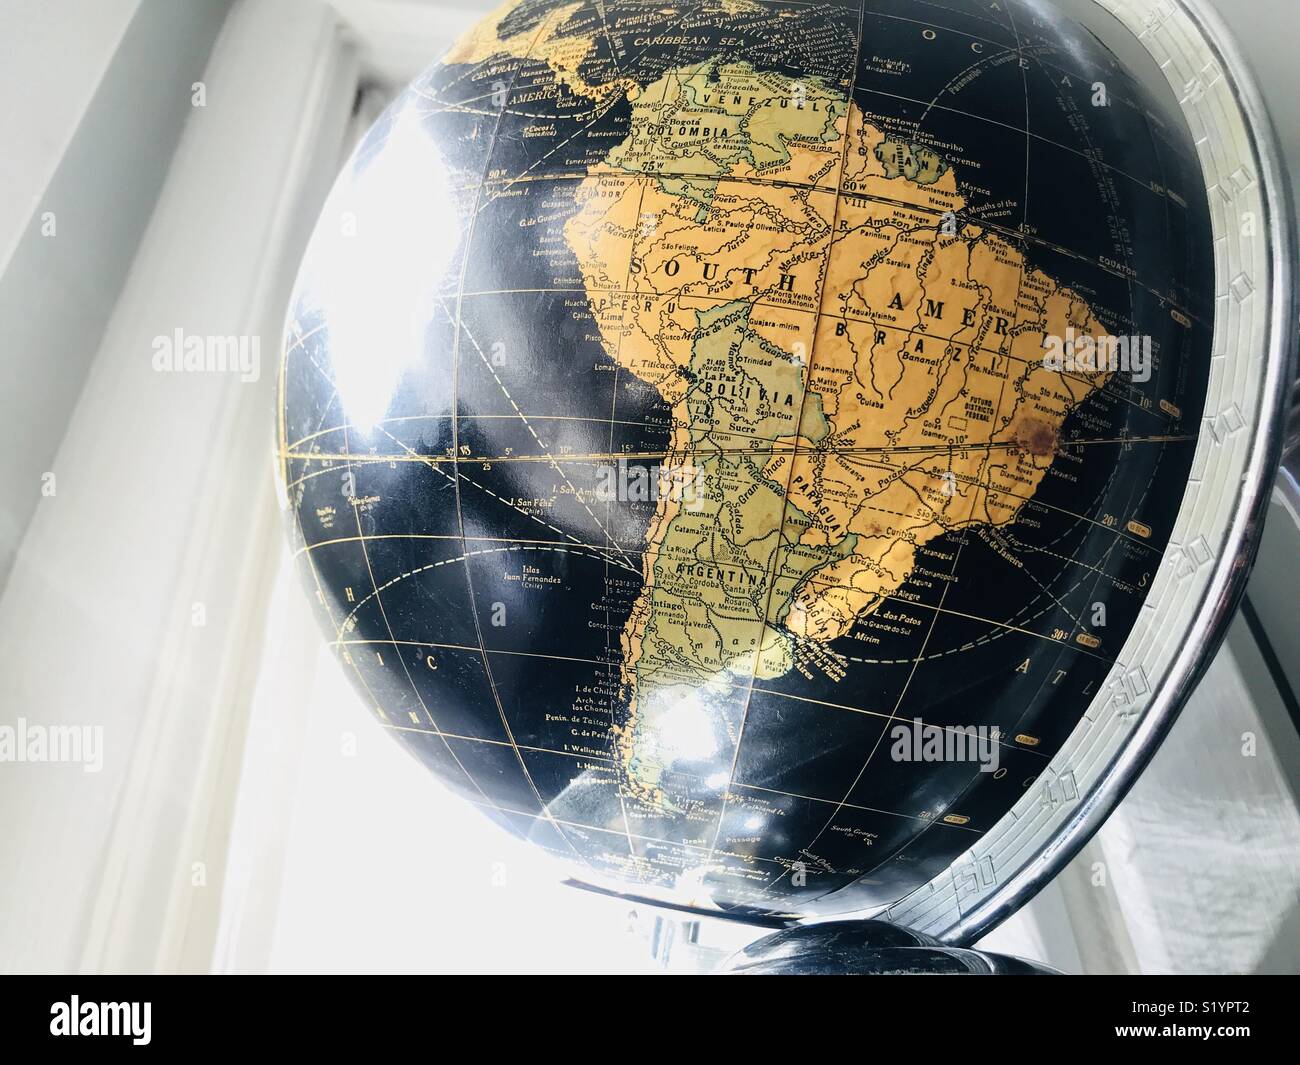 Südamerika auf einem vintage Globus Stockfotografie - Alamy